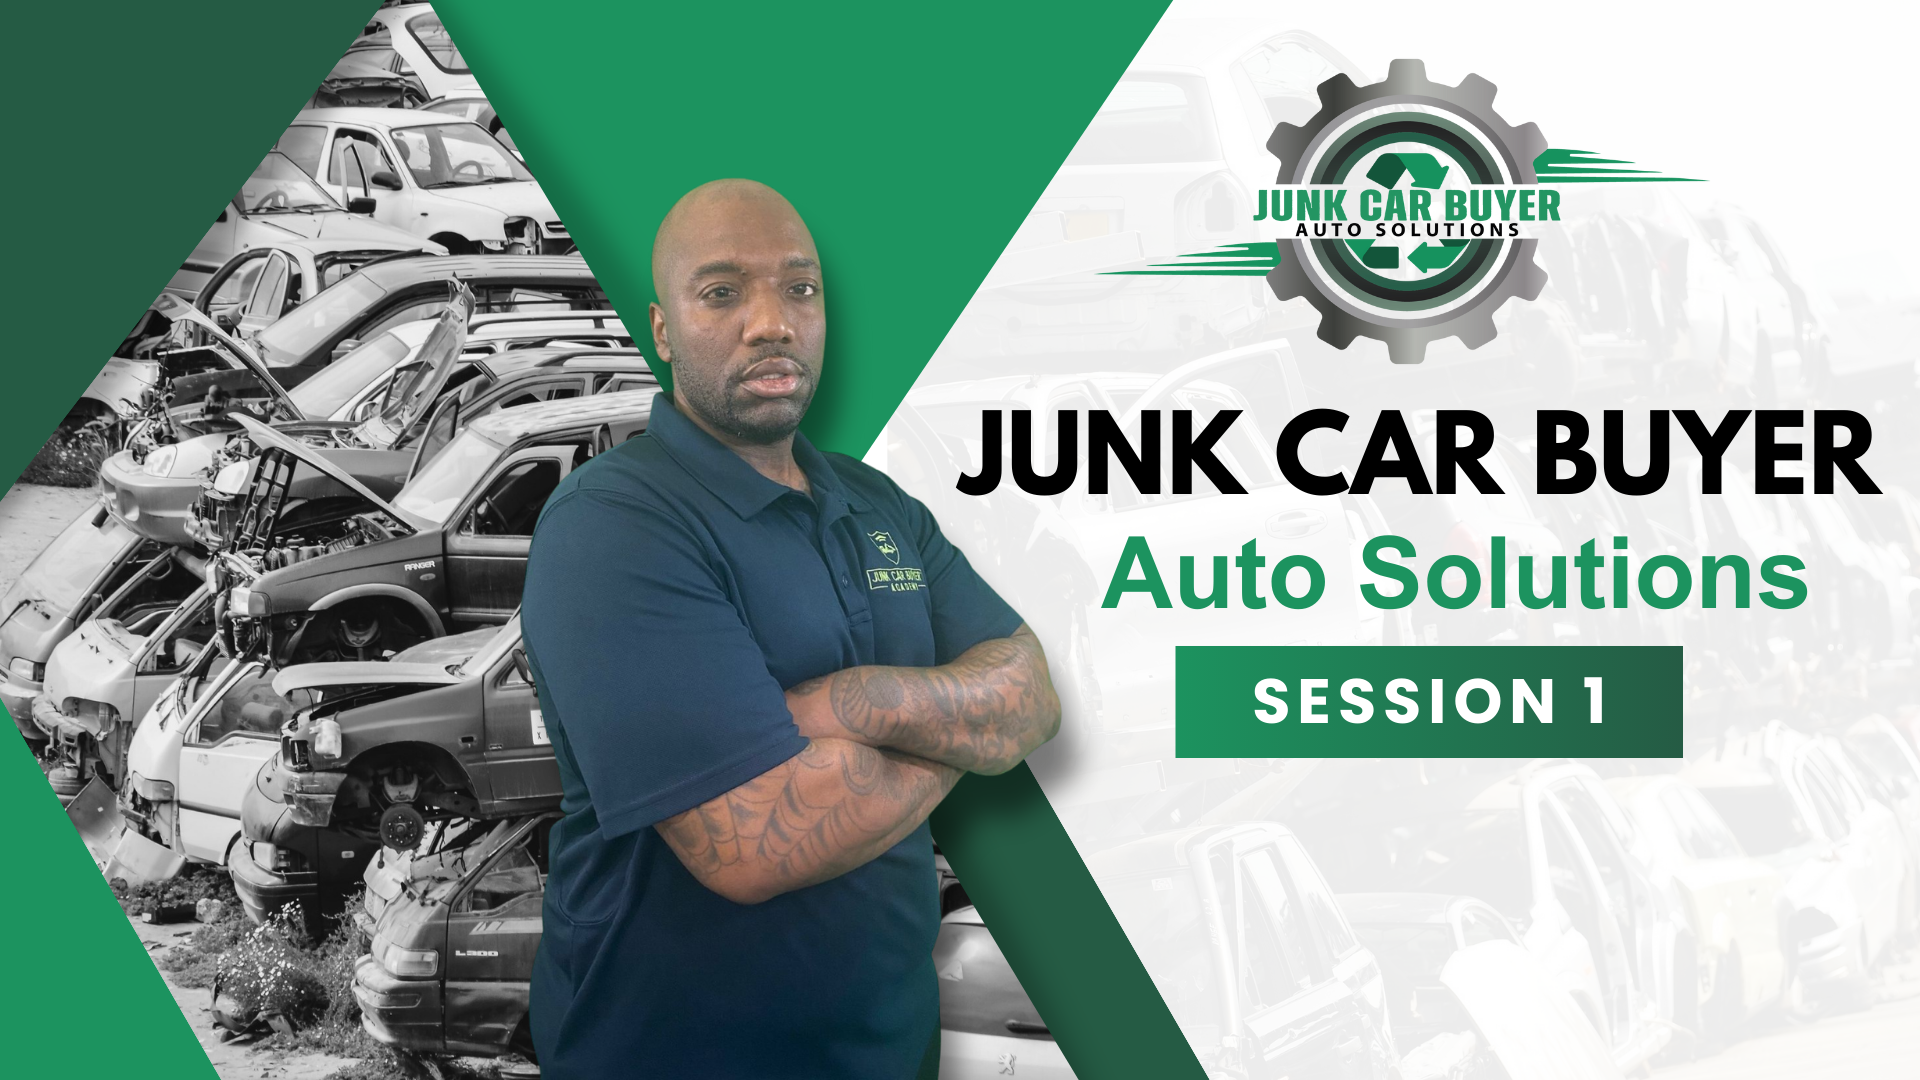 Junk Car Buyer Auto Solutions